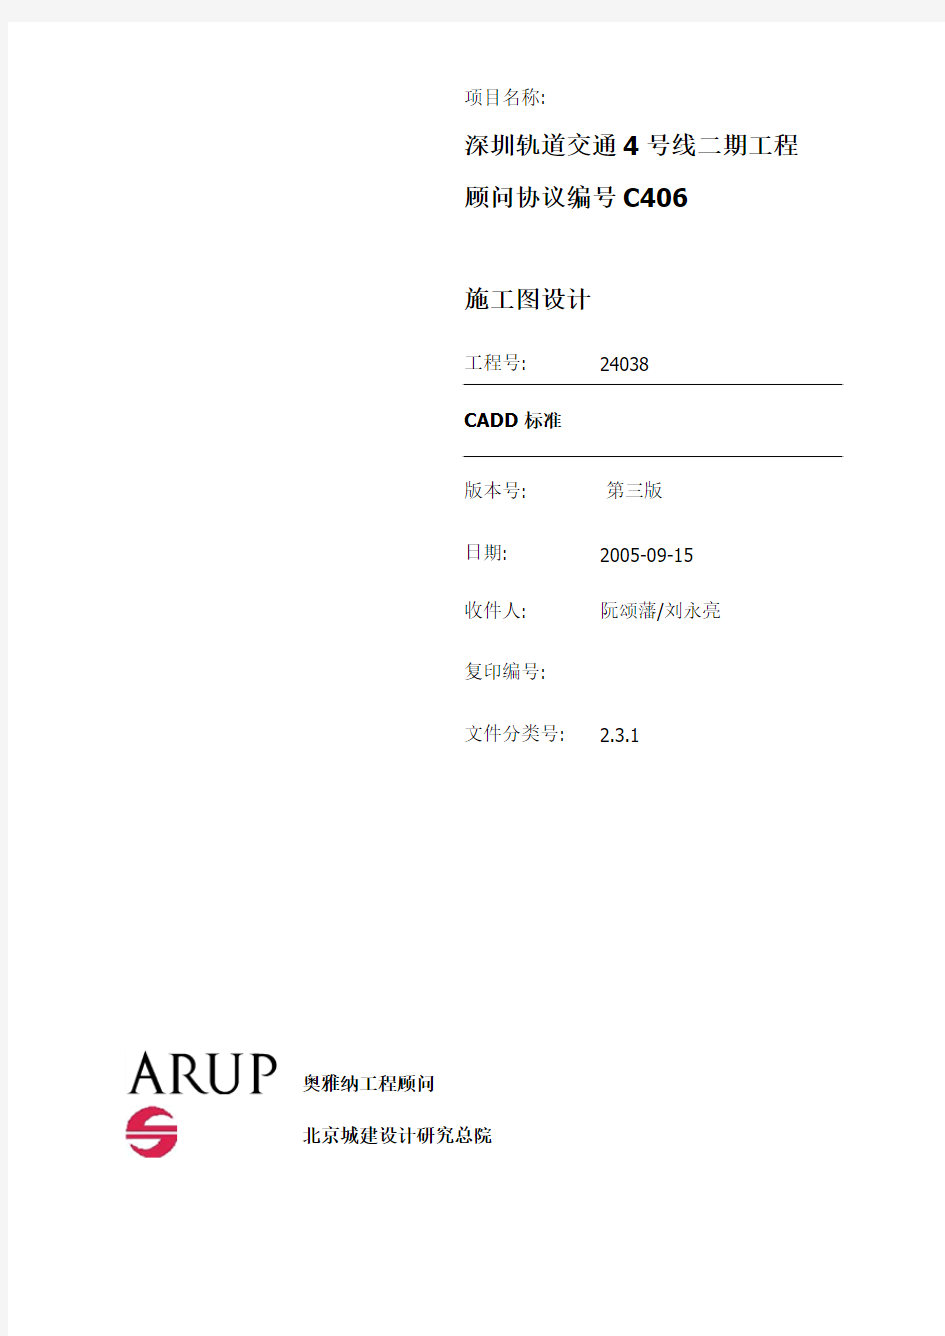 CAD Manual_Chinese Version_Rev.2